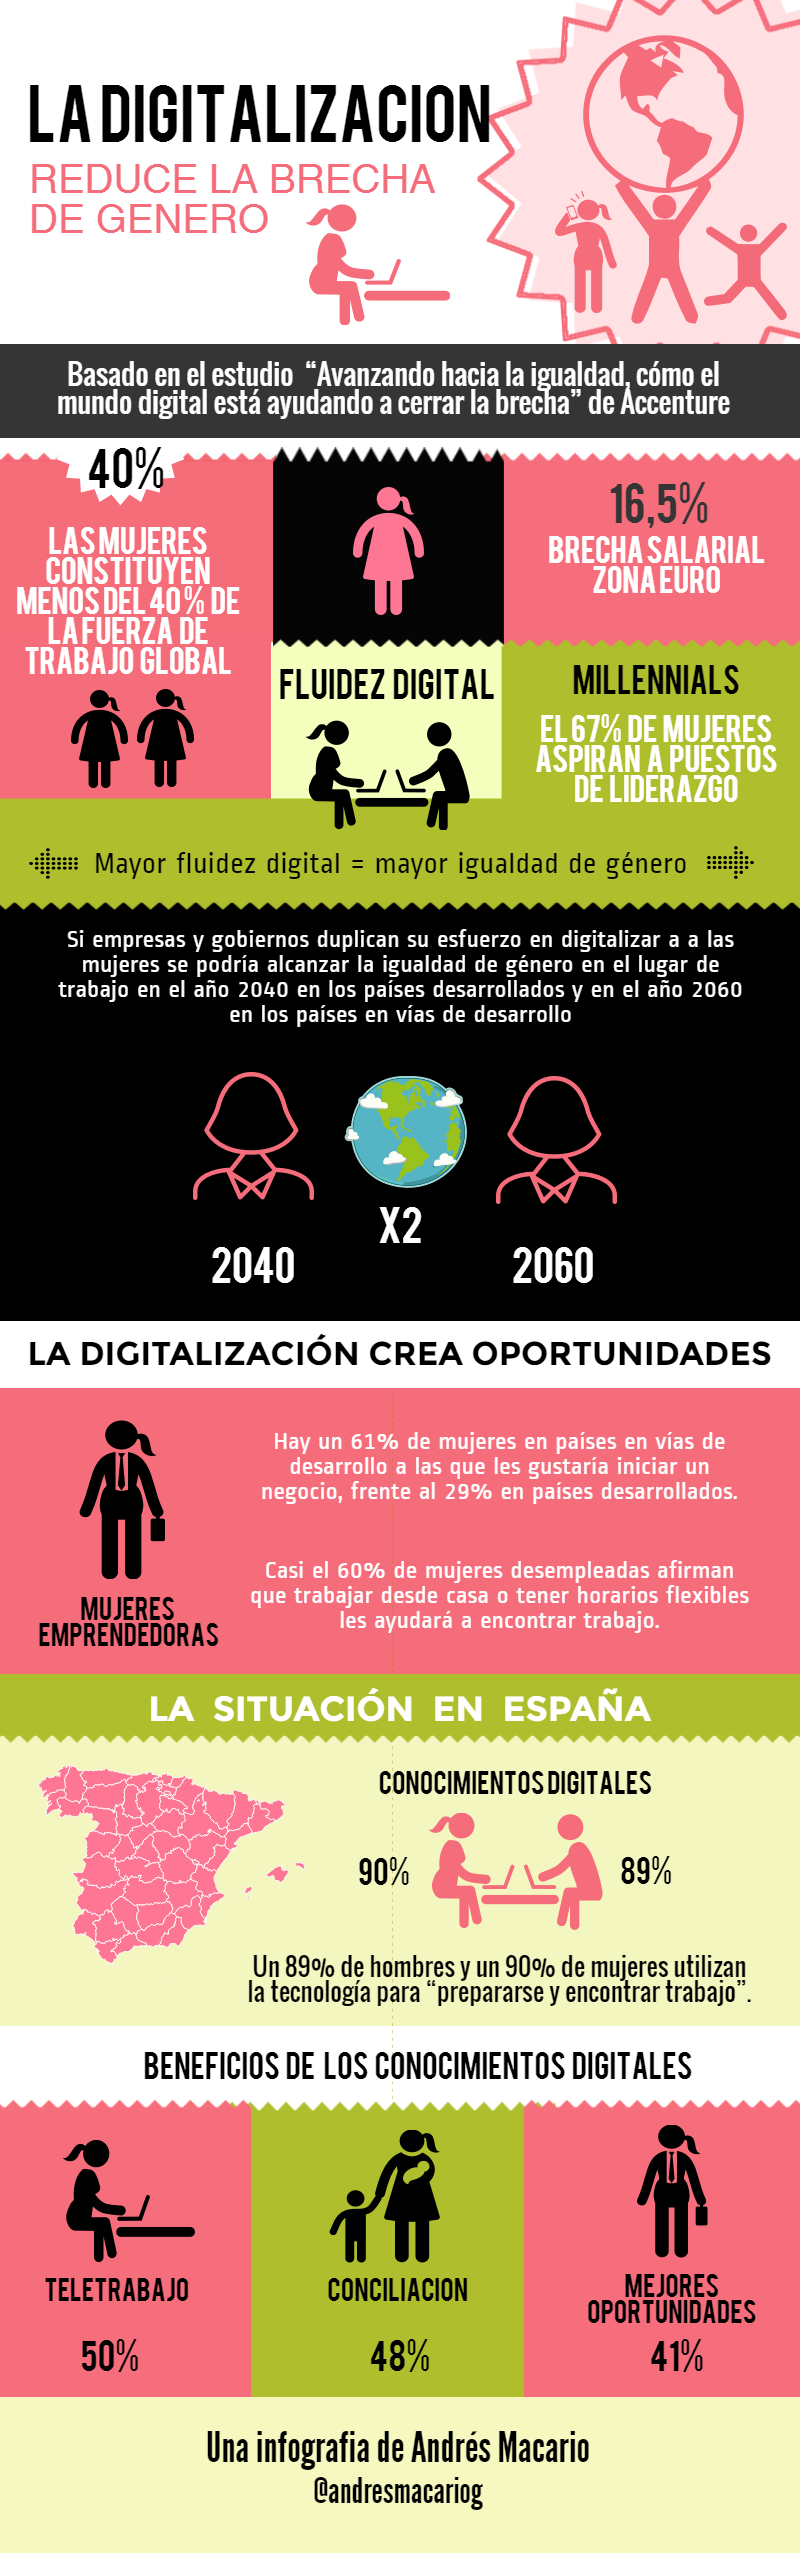 Digitalizacion reduce brecha de genero Infografia Andres Macario